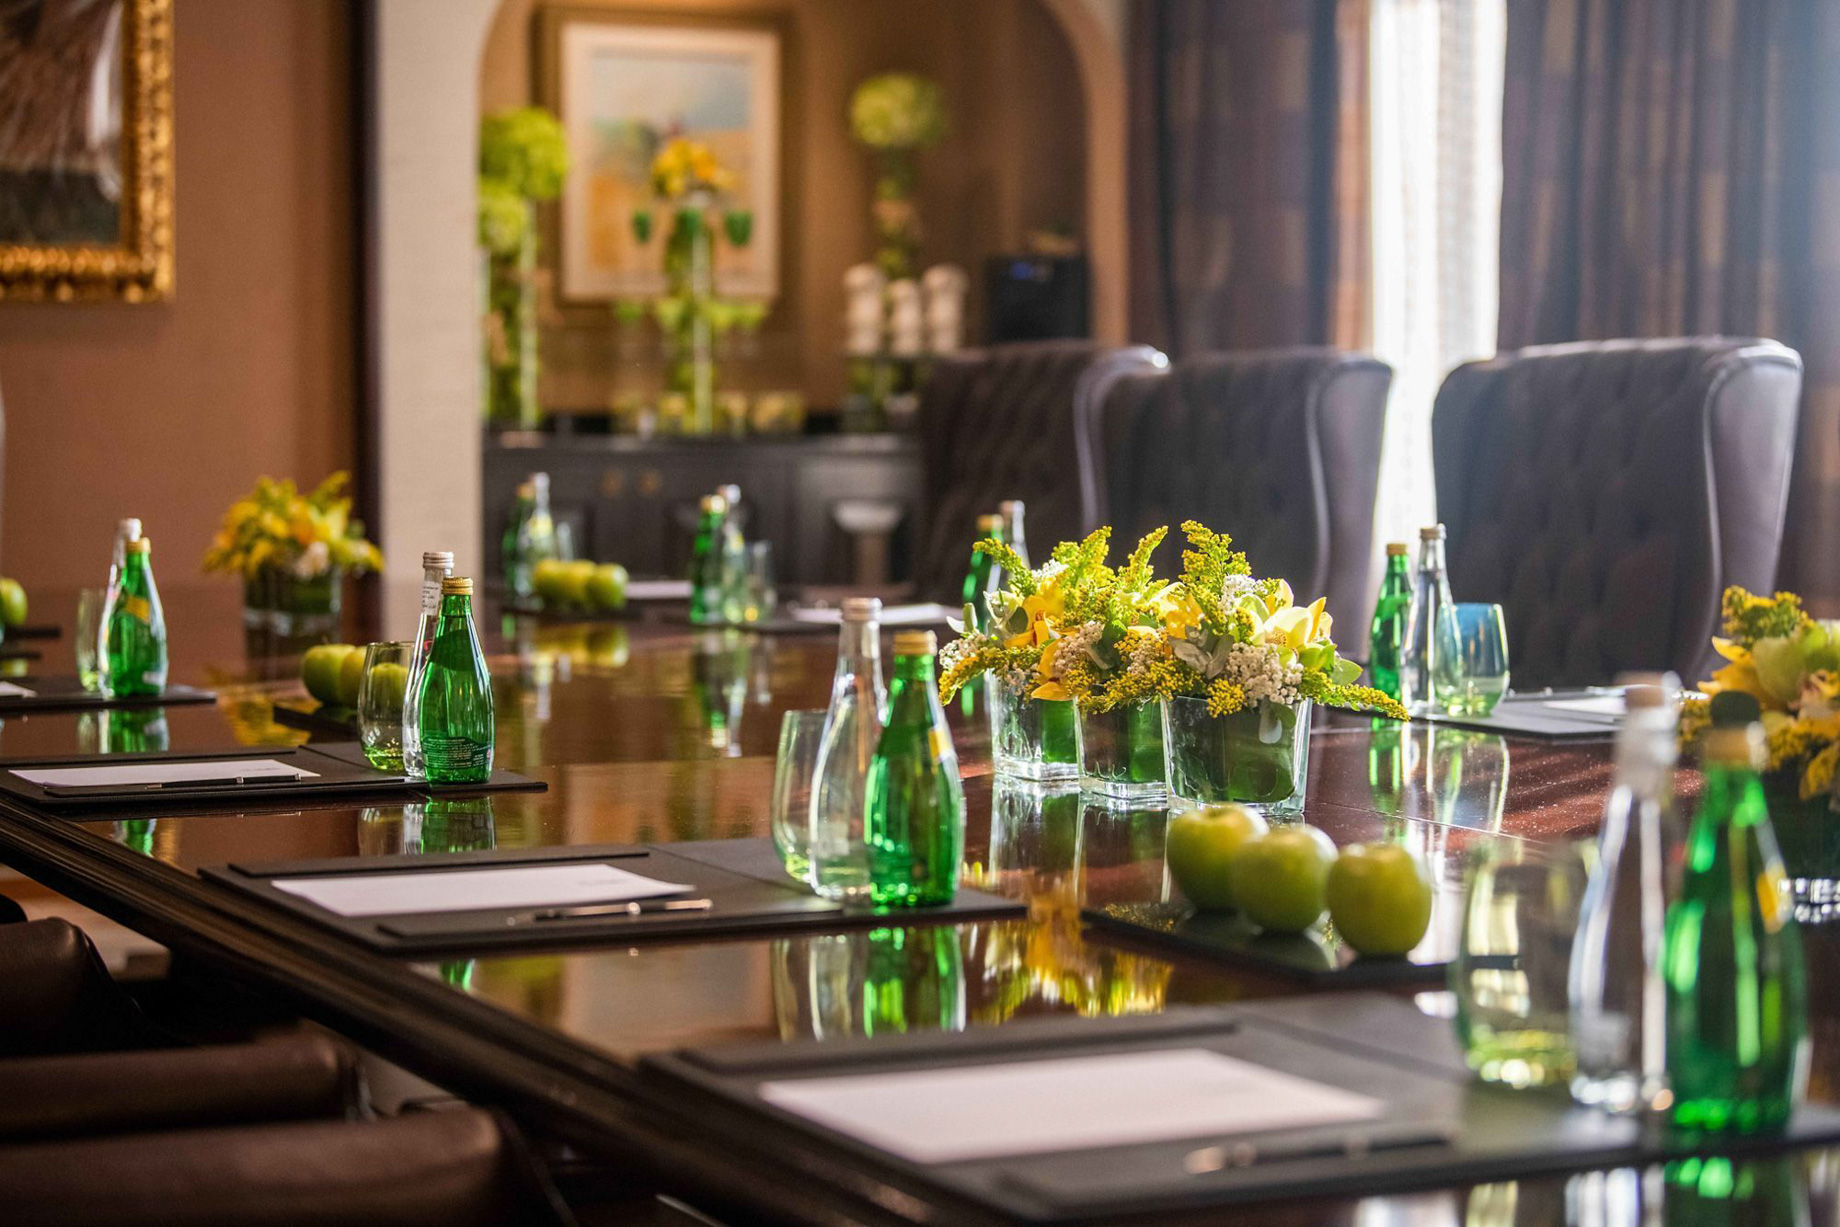 Sharq Village & Spa, A Ritz-Carlton Hotel - Doha, Qatar - Meeting Room Table